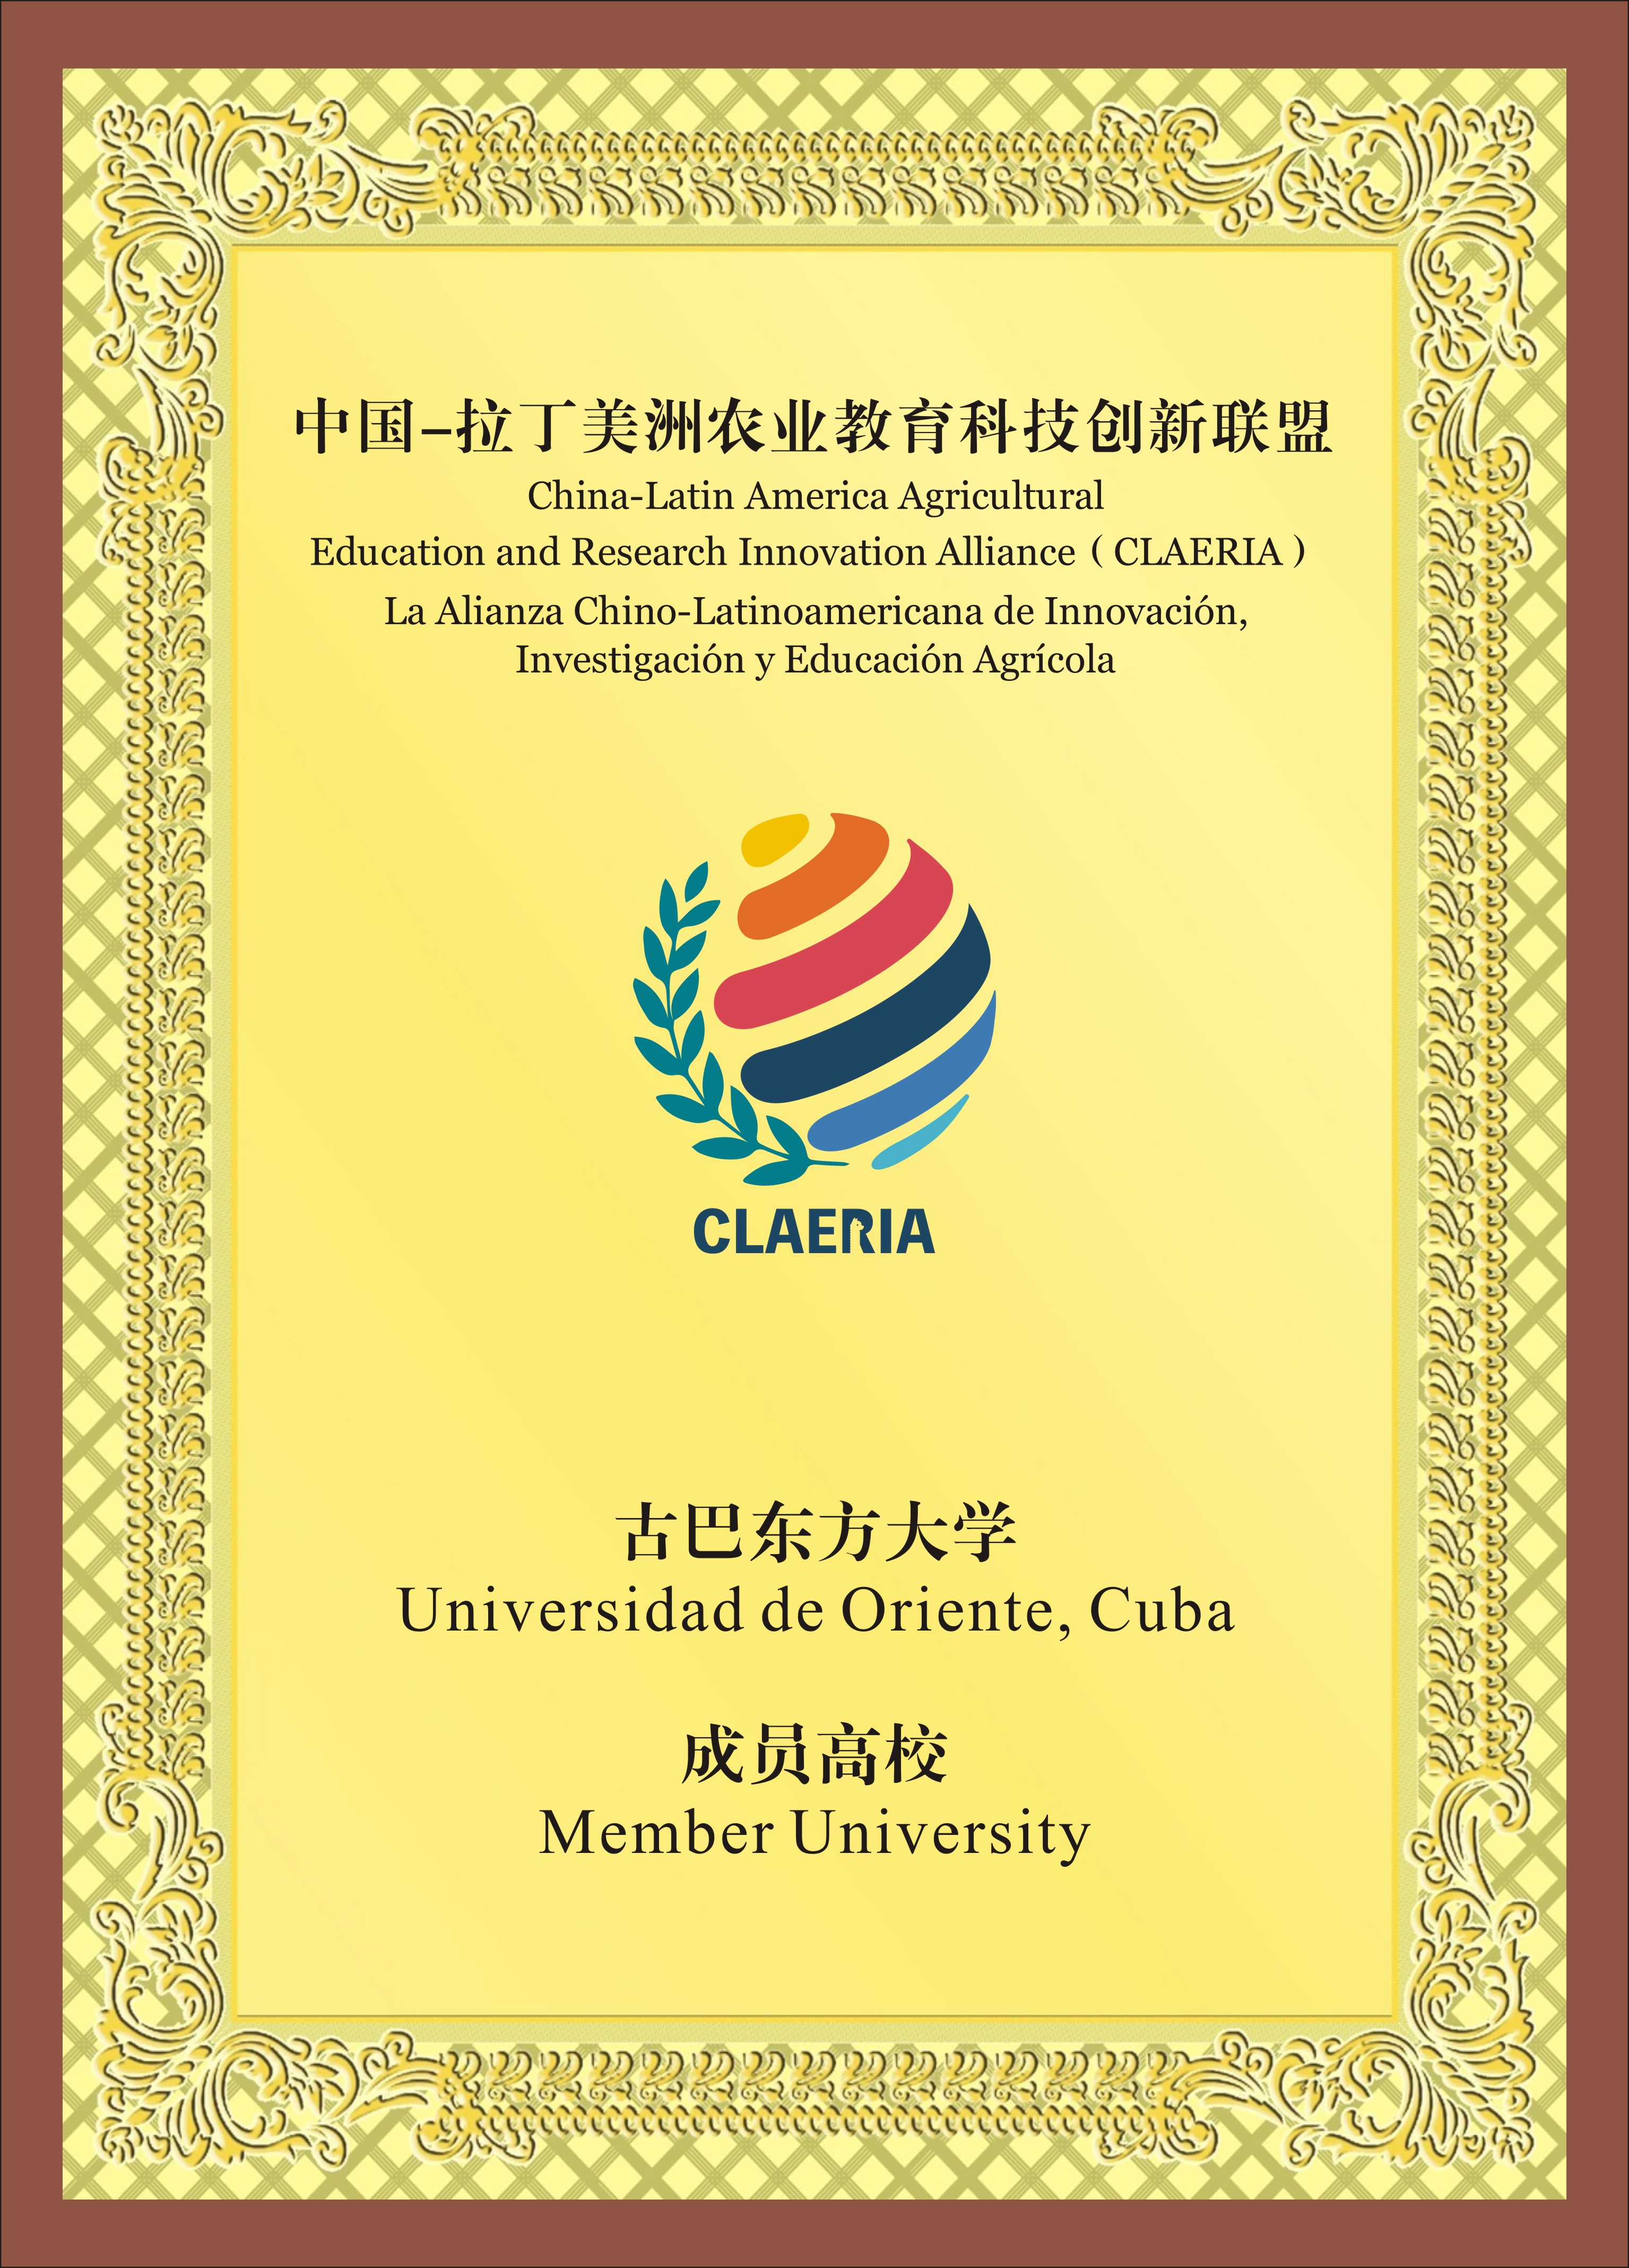 <a href='/eng/2022/0317/c13089a308736/page.htm' target='_blank' title='Universidad de Oriente-First University in CUBA Joined CLAERIA'>Universidad de Oriente-First U...</a>